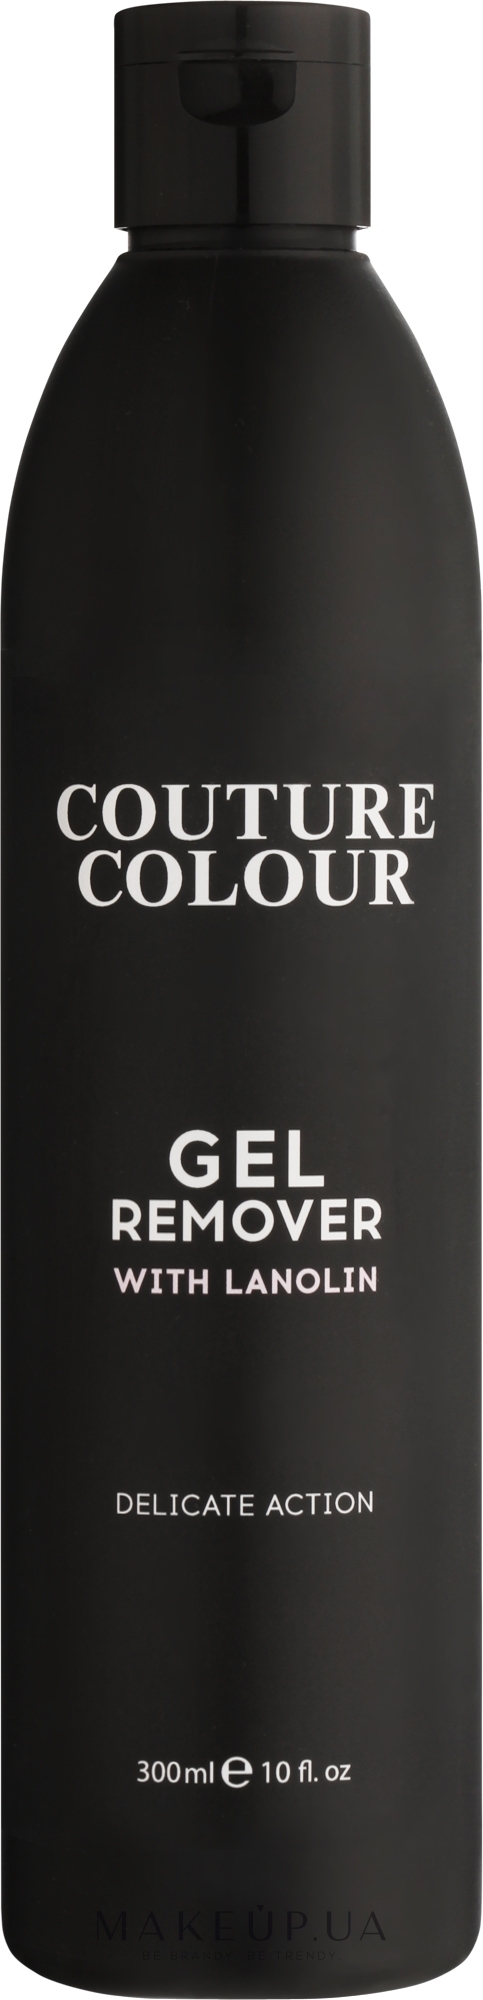 Засіб для видалення гелю та гель-лаку с ланоліном - Couture Colour Gel Remover with Lanolin — фото 300ml